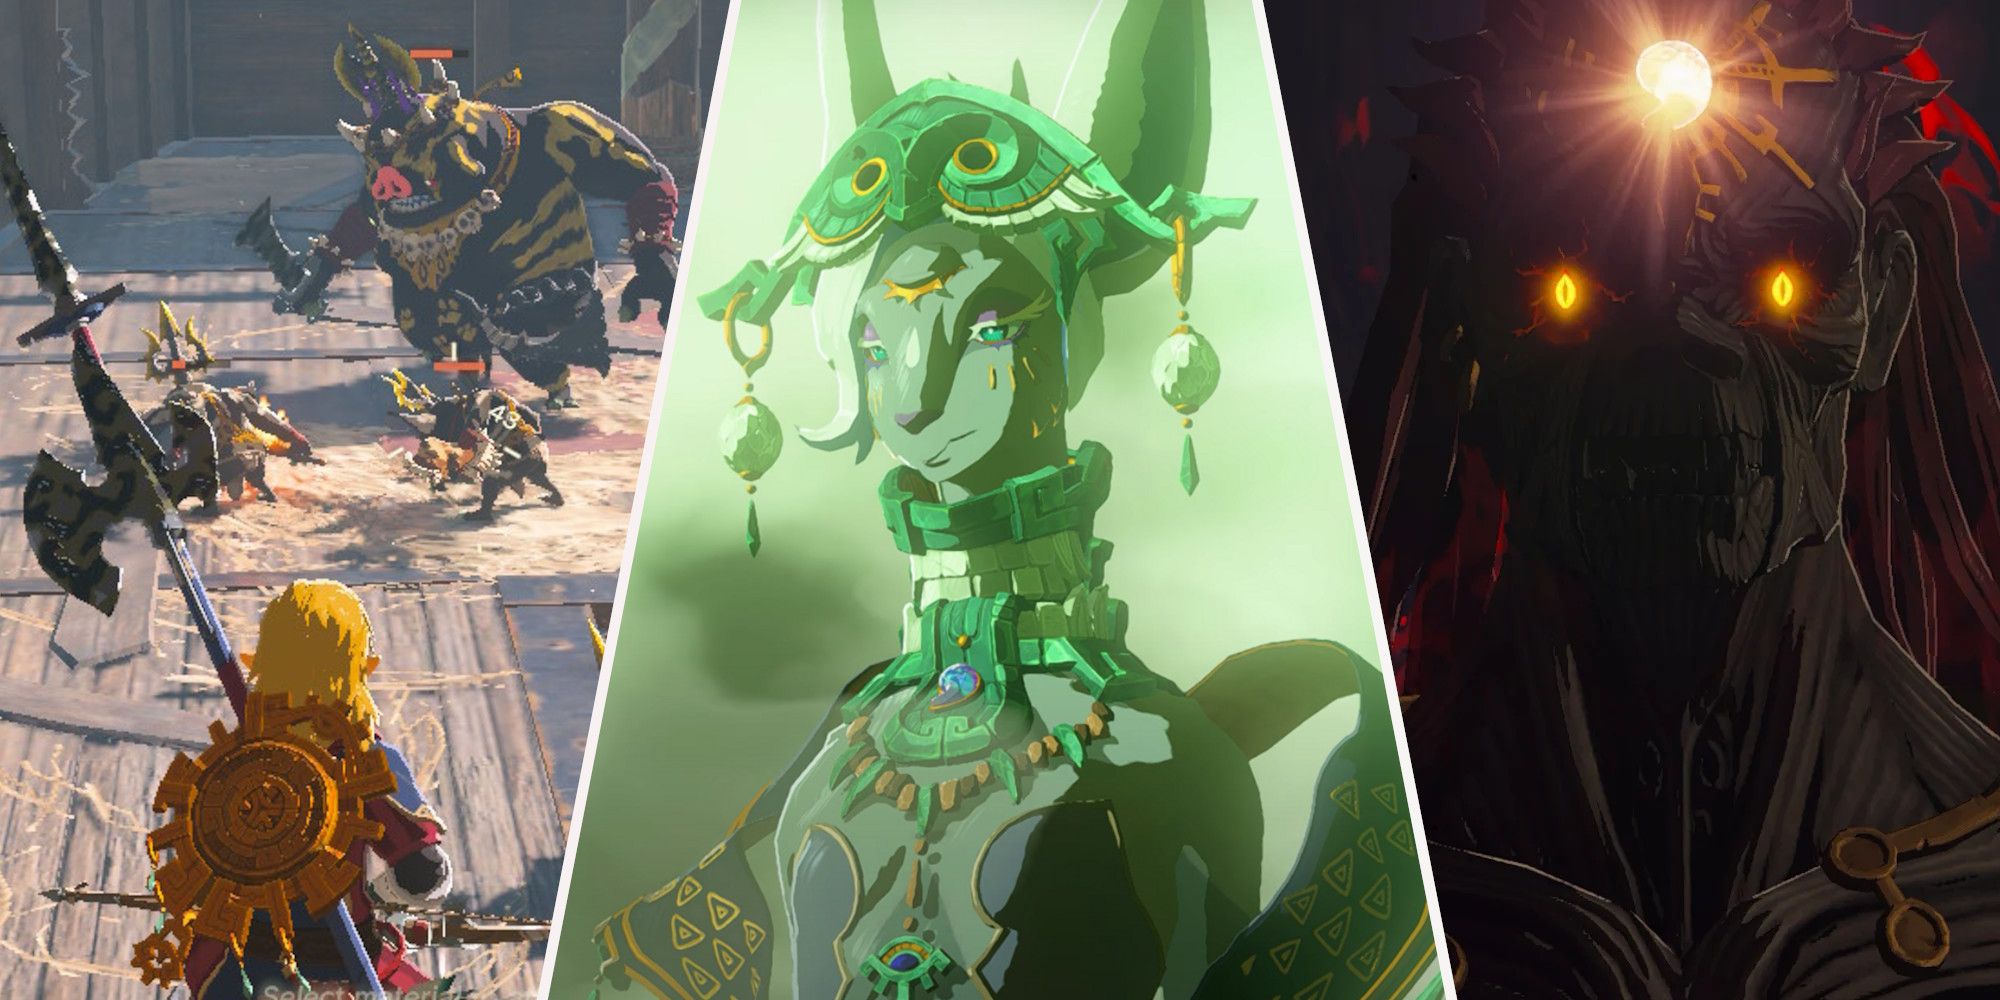 Link facing Lurelin Pirates, Mineru in fog, and Ganondorf with secret stone